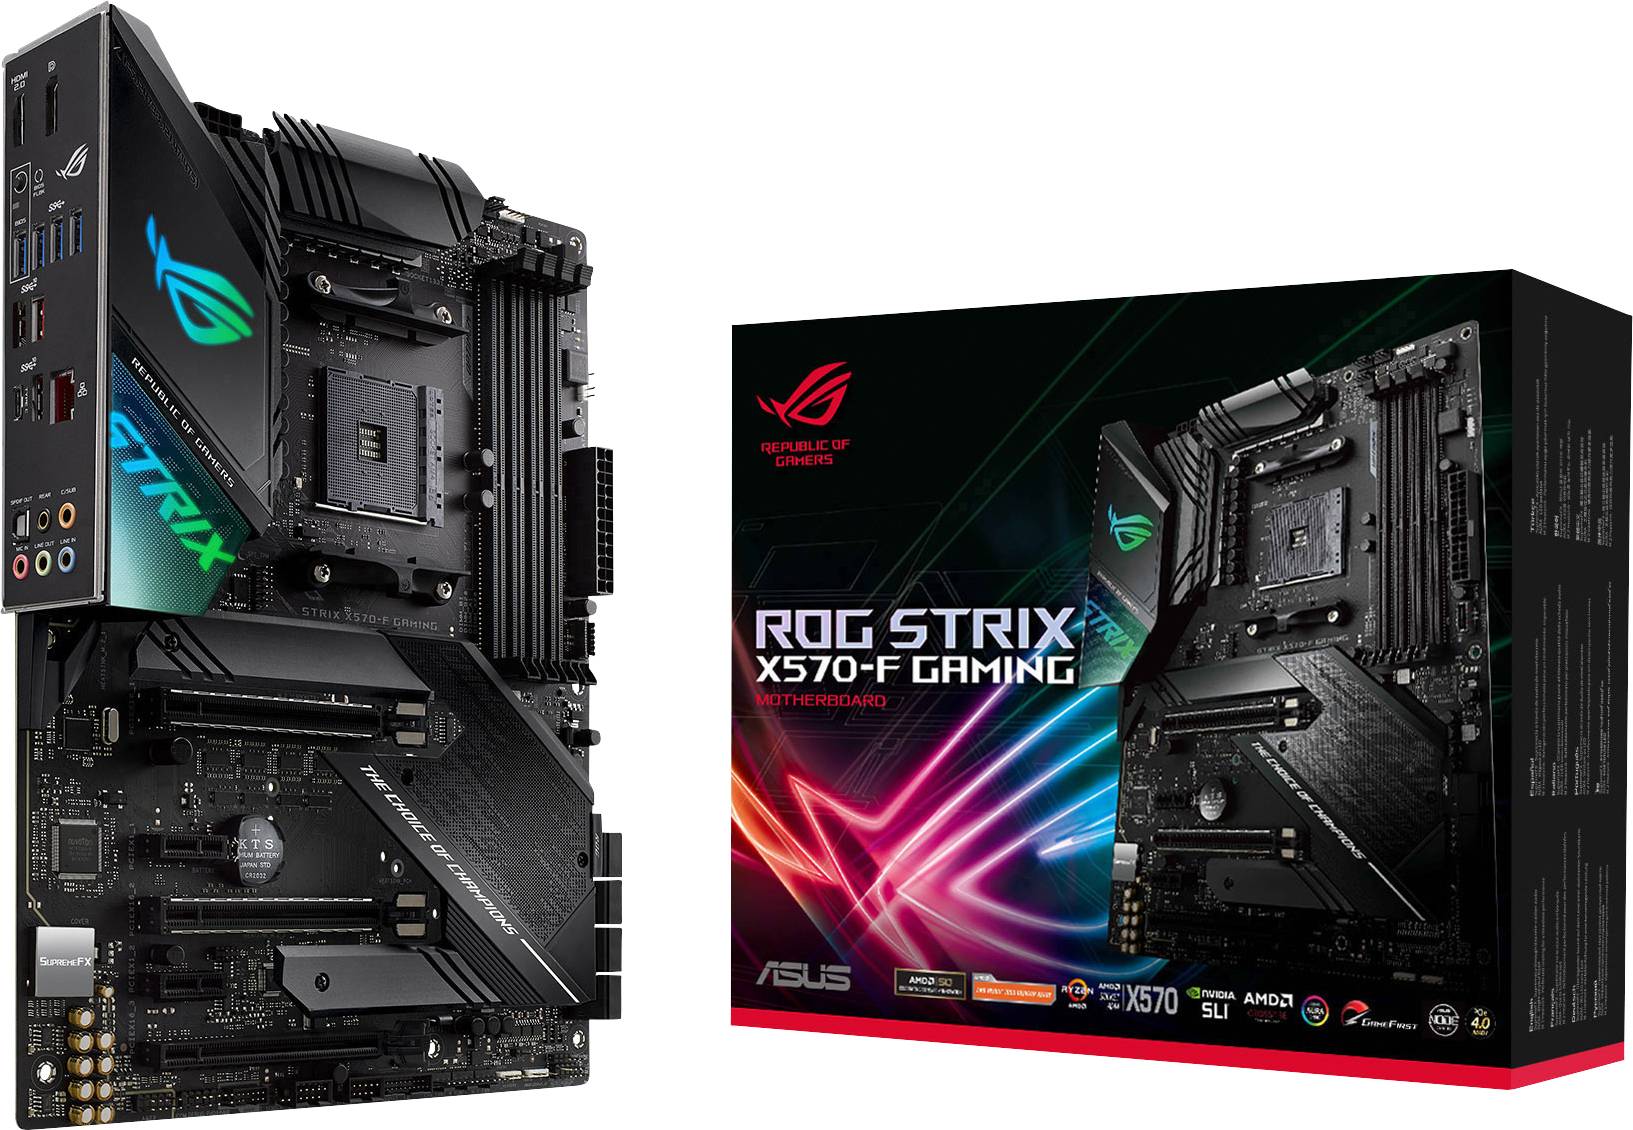 Asus ROG Strix X570-F Gaming Motherboard PC base AMD AM4 Form factor (details) ATX Motherboard chipset AMD® X570 | Conrad.com